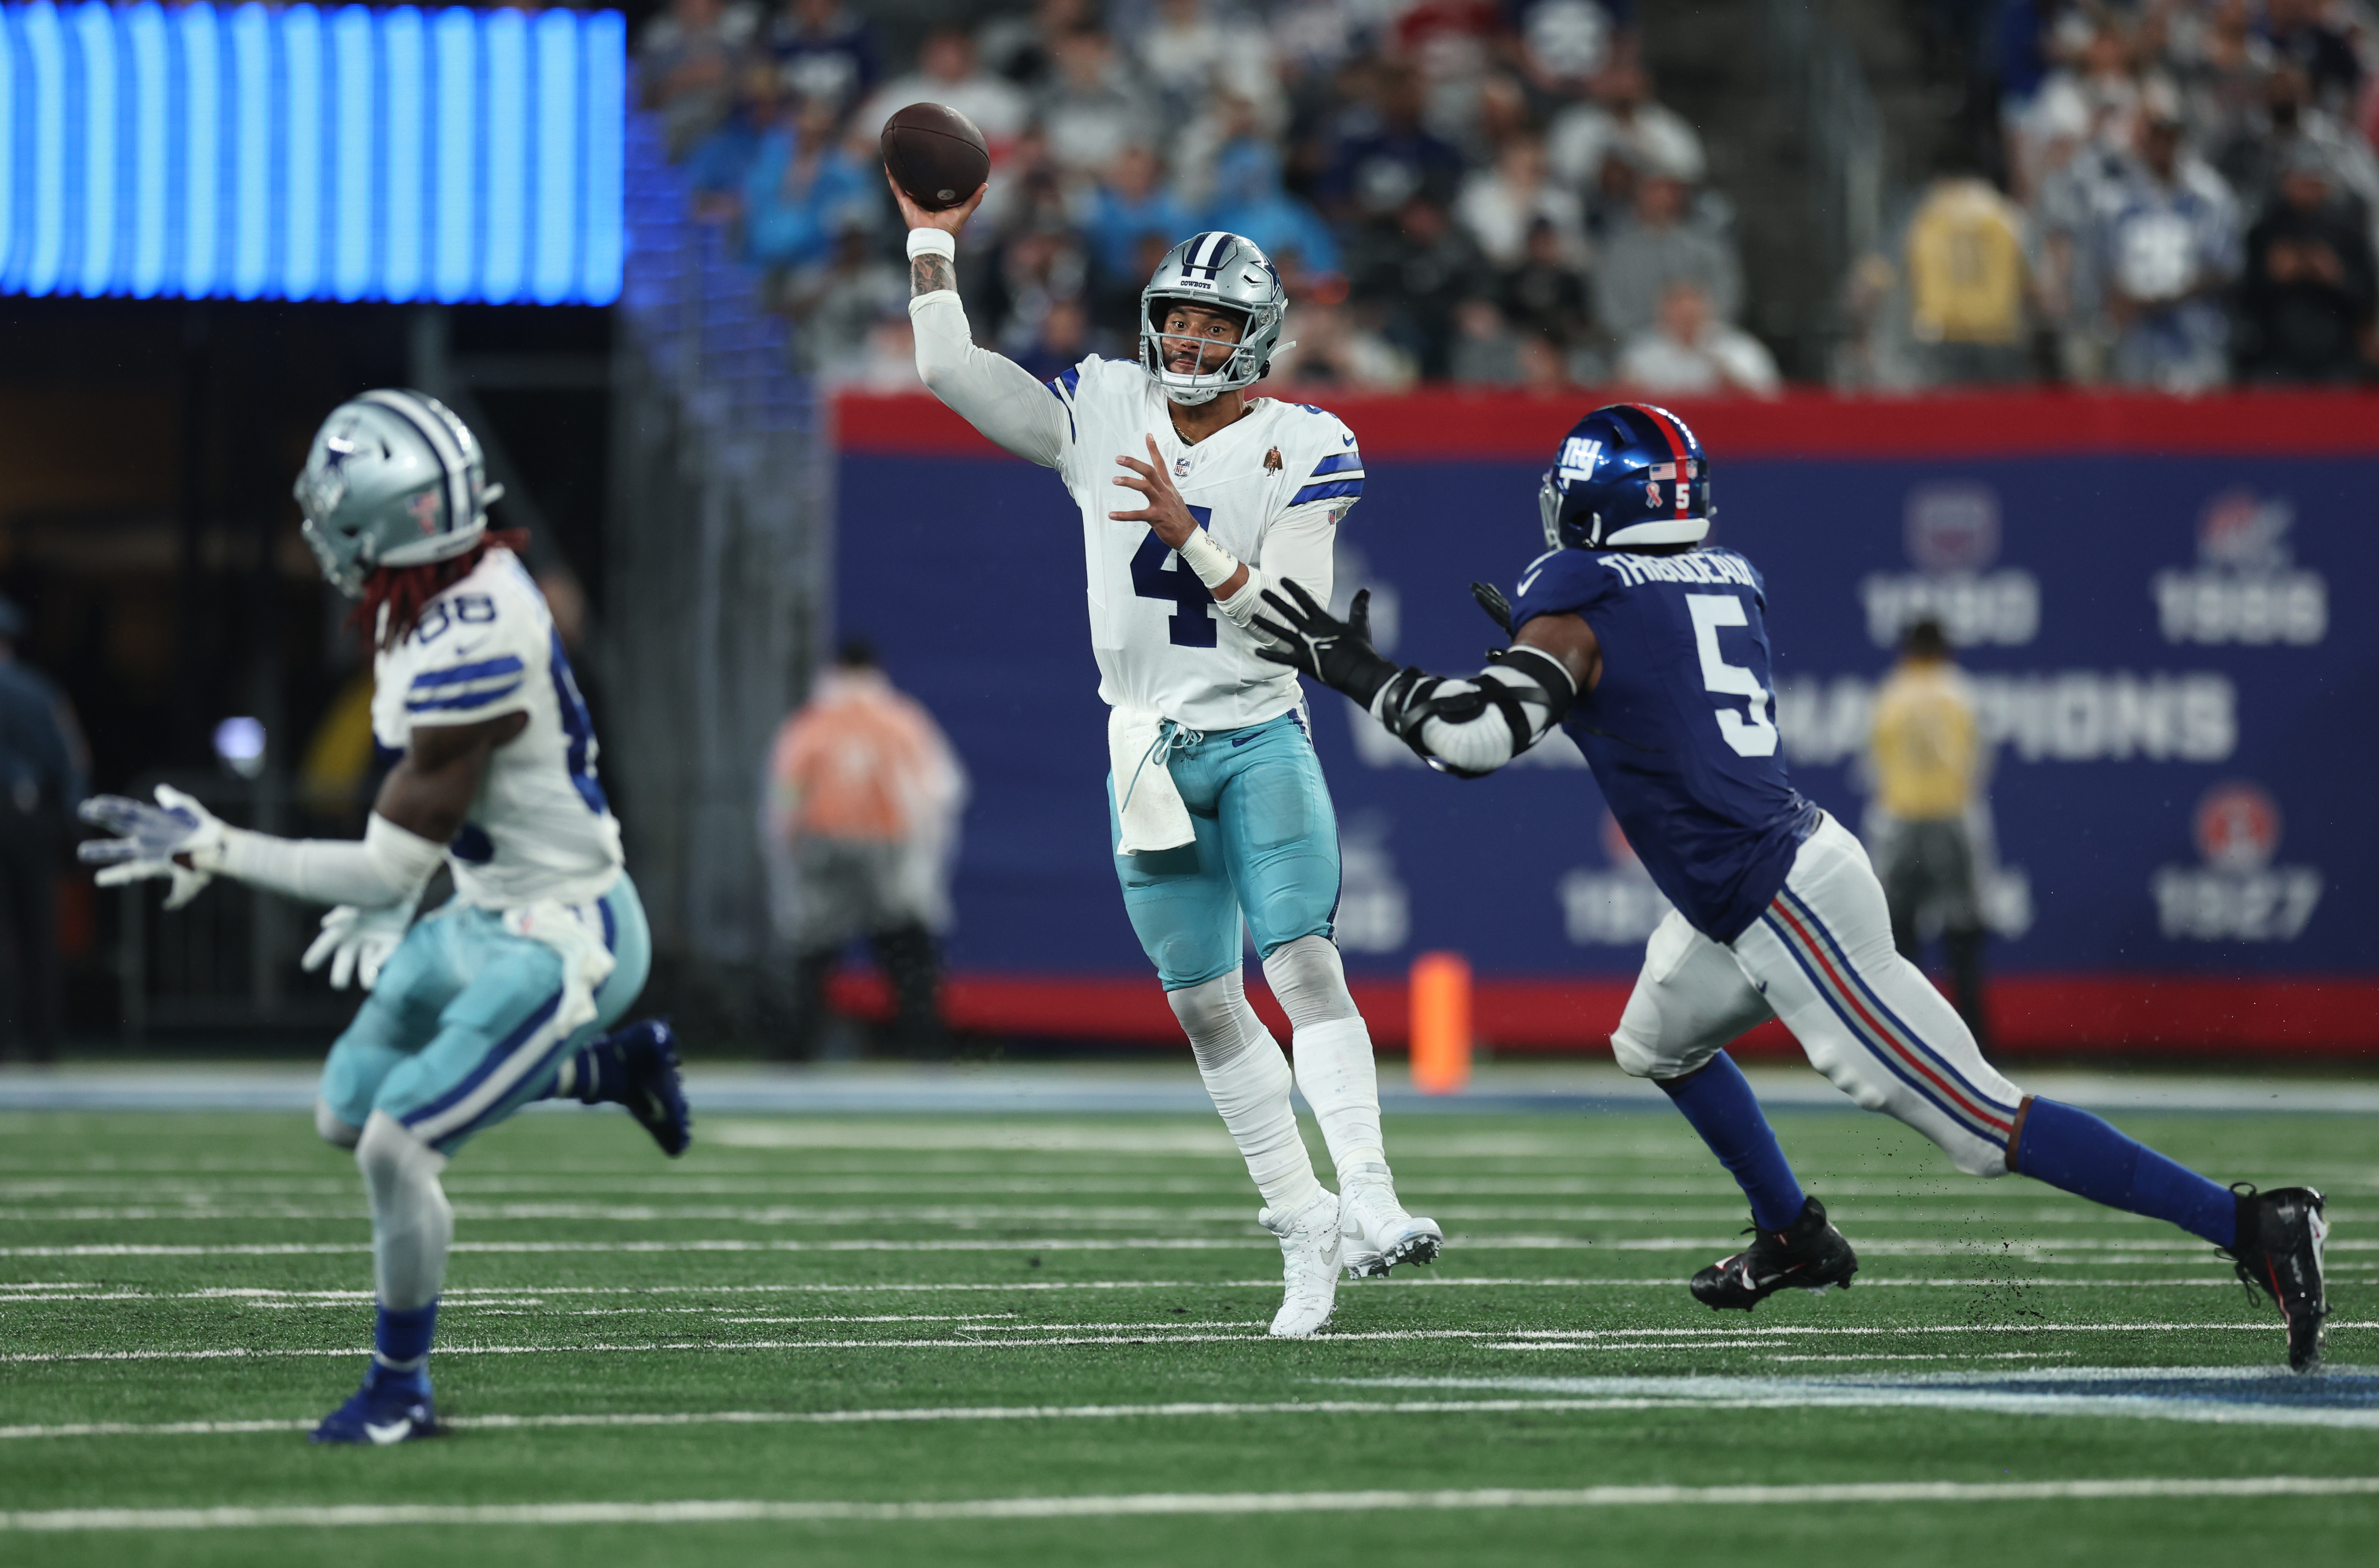 Cowboys kick off season with win against Giants – NBC 5 Dallas